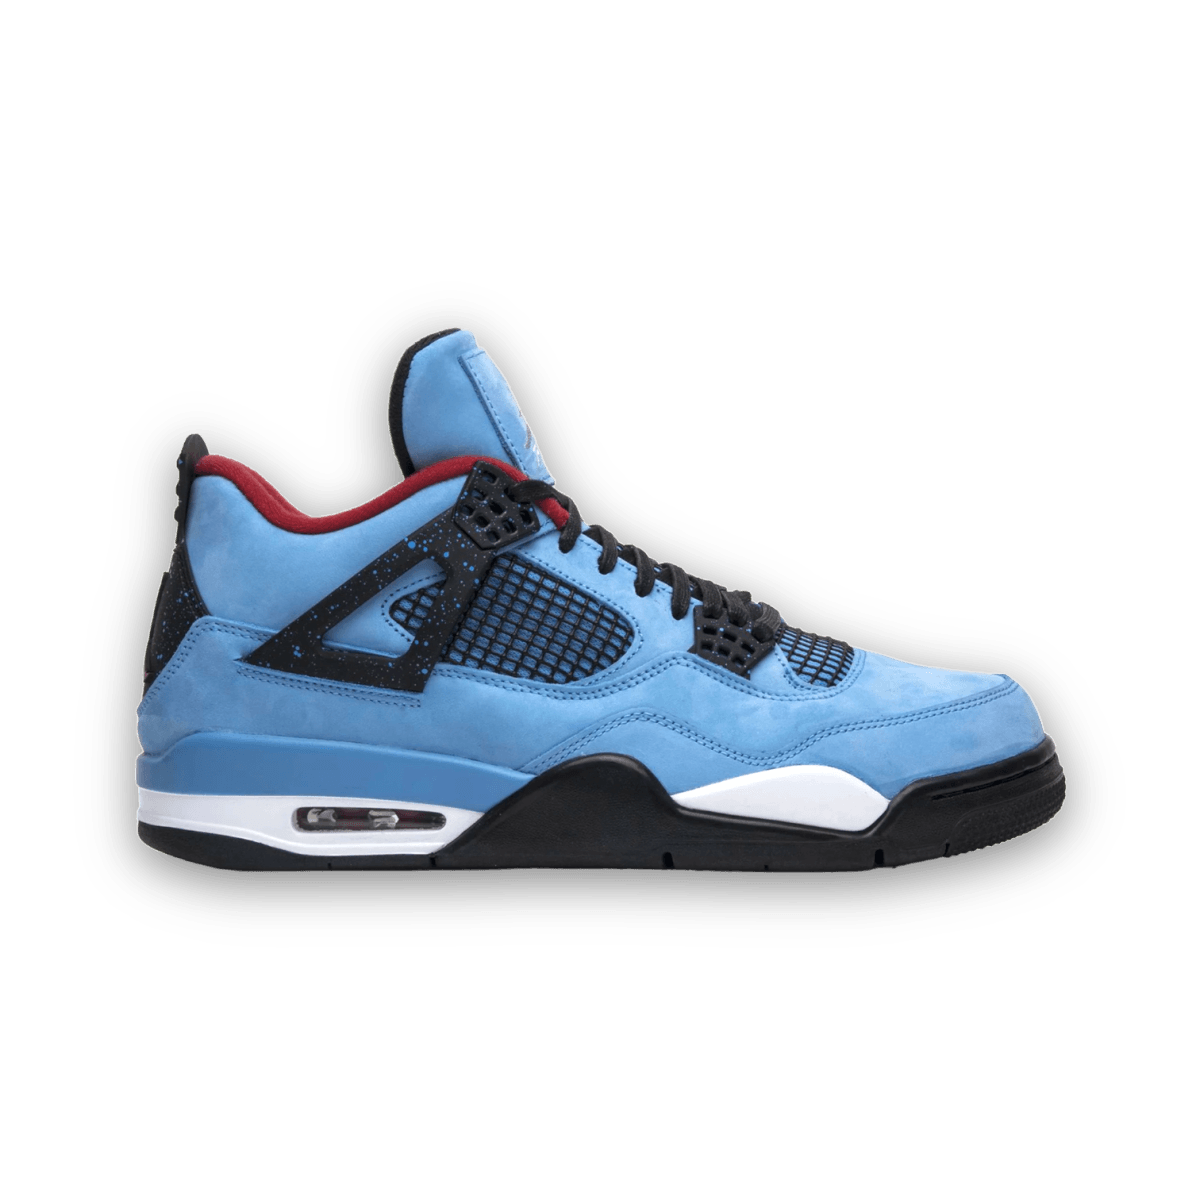 Air Jordan 4 Retro x Travis Scott 'Cactus Jack' - Mid Sneaker - Jordan - Jawns on Fire - sneakers